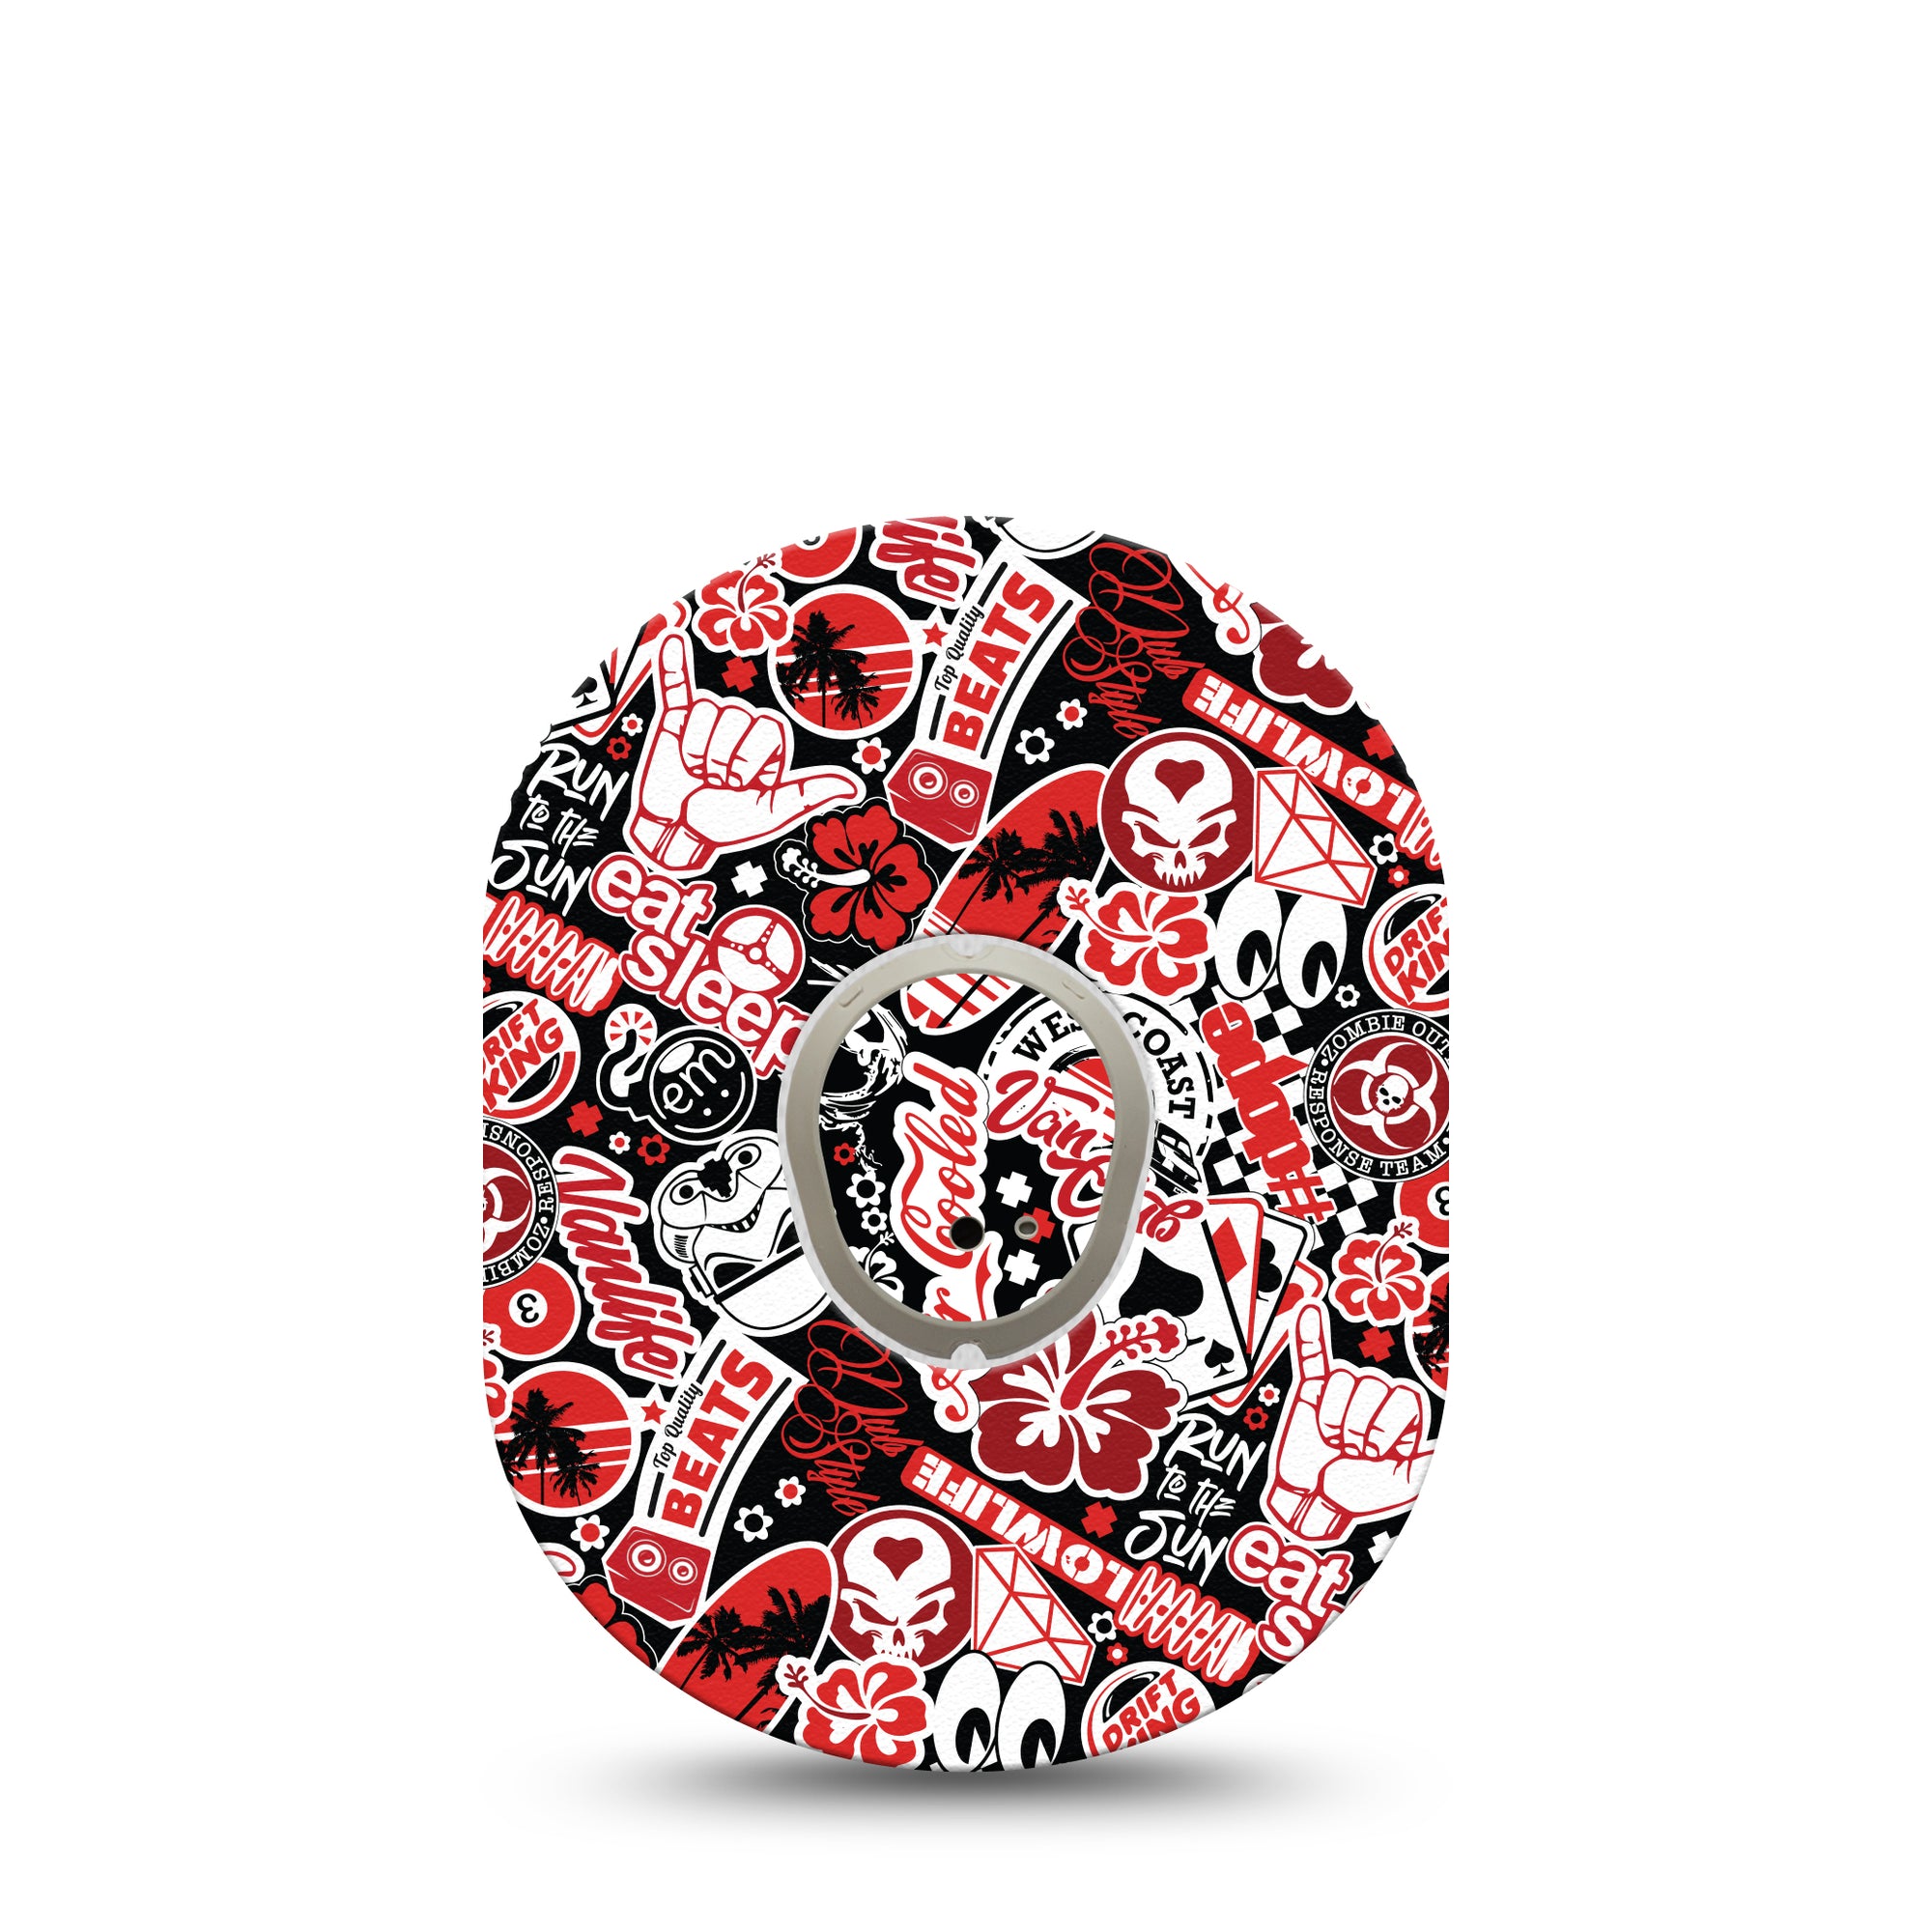 Sticker Bomb Dexcom G7 Transmitter Sticker, Single, Red And Black Stickers Themed, Dexcom G7 Vinyl Transmitter Sticker With Matching Dexcom G7 CGM, Overlay Patch Design, Dexcom Stelo Glucose Biosensor System